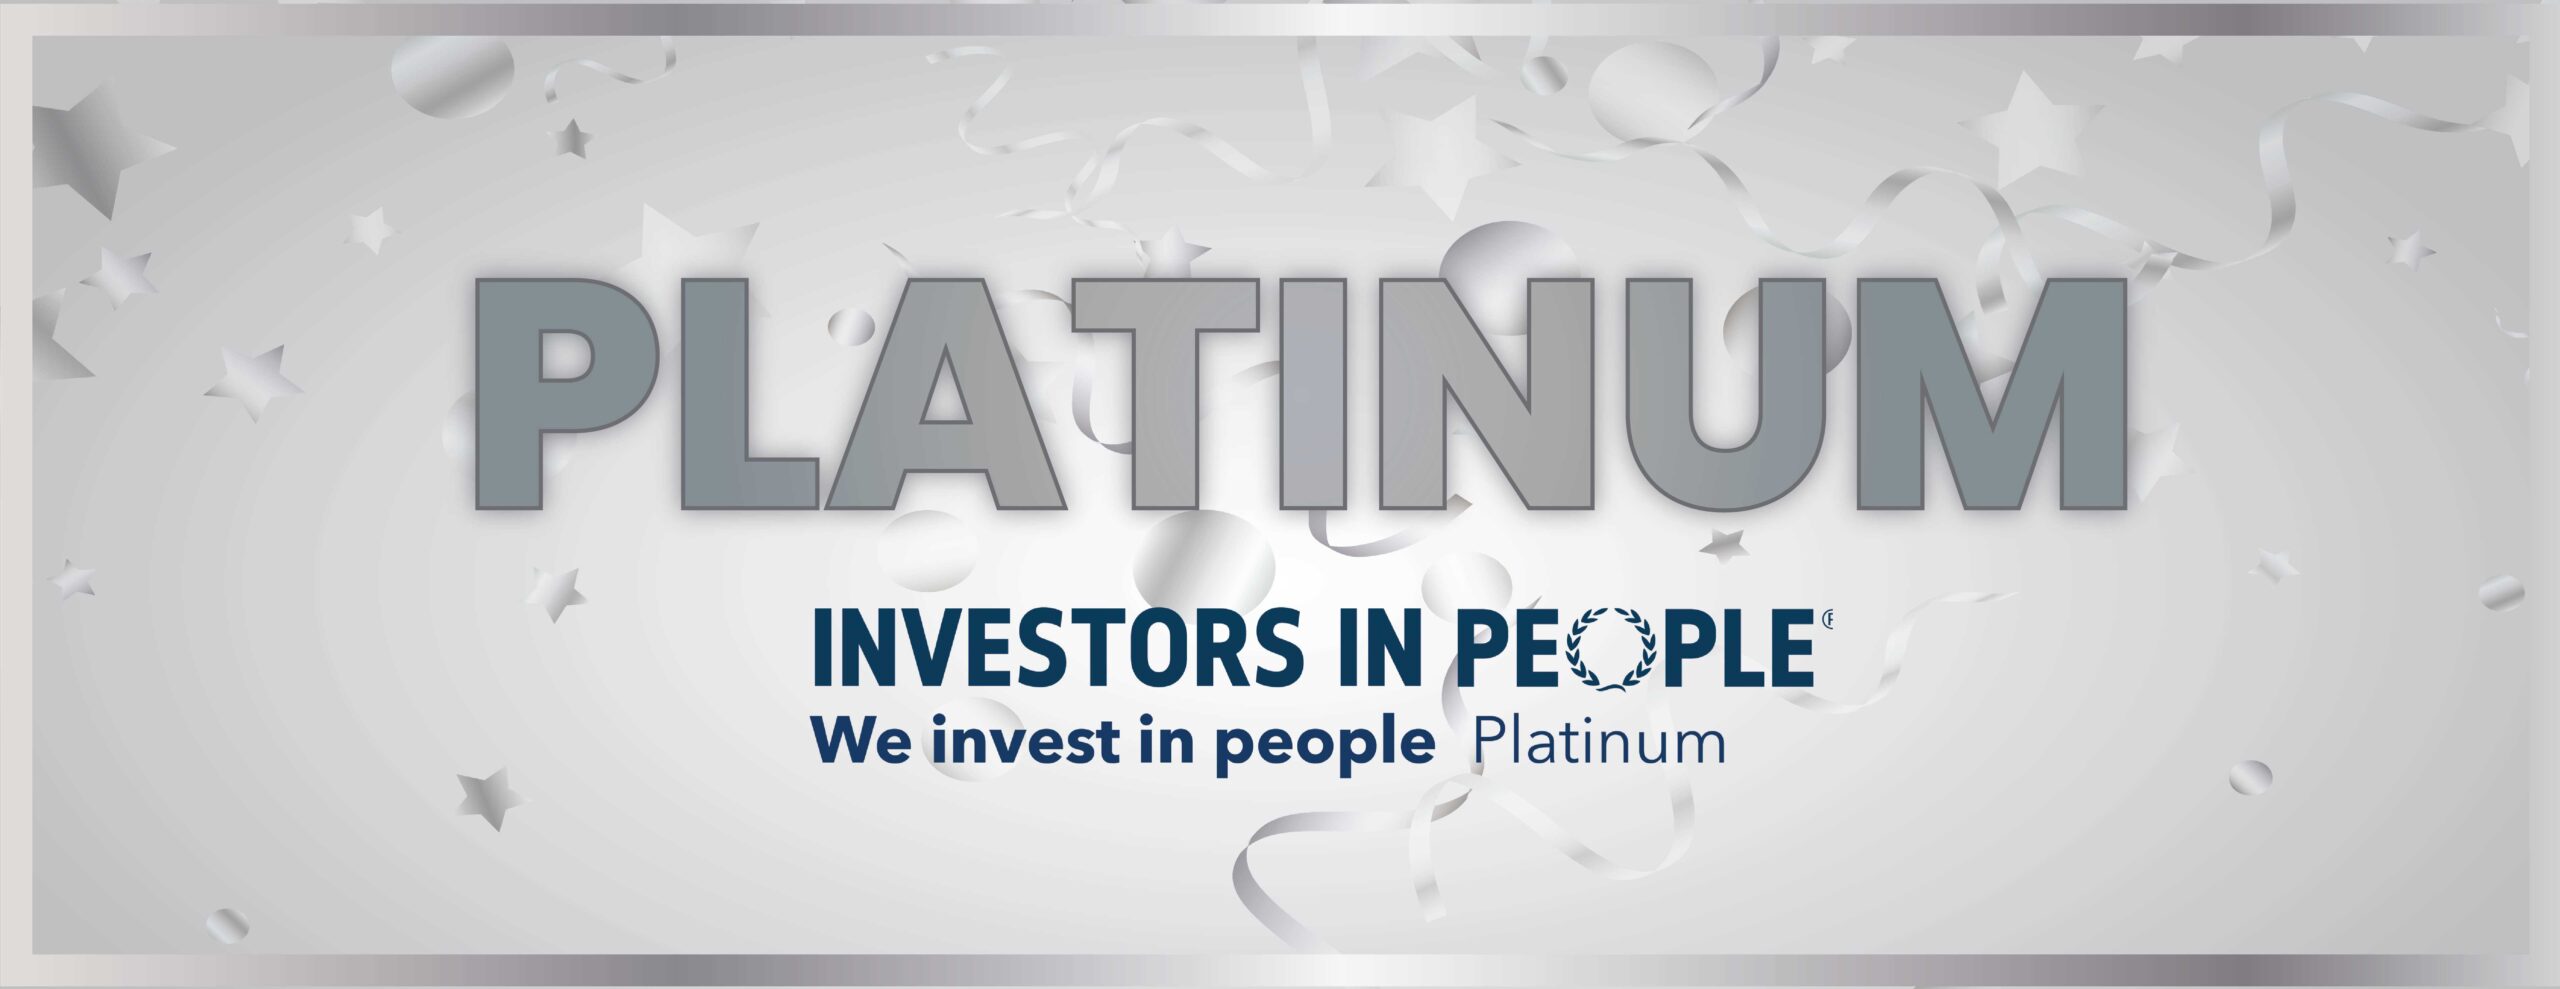 We’re Investors in People Platinum!